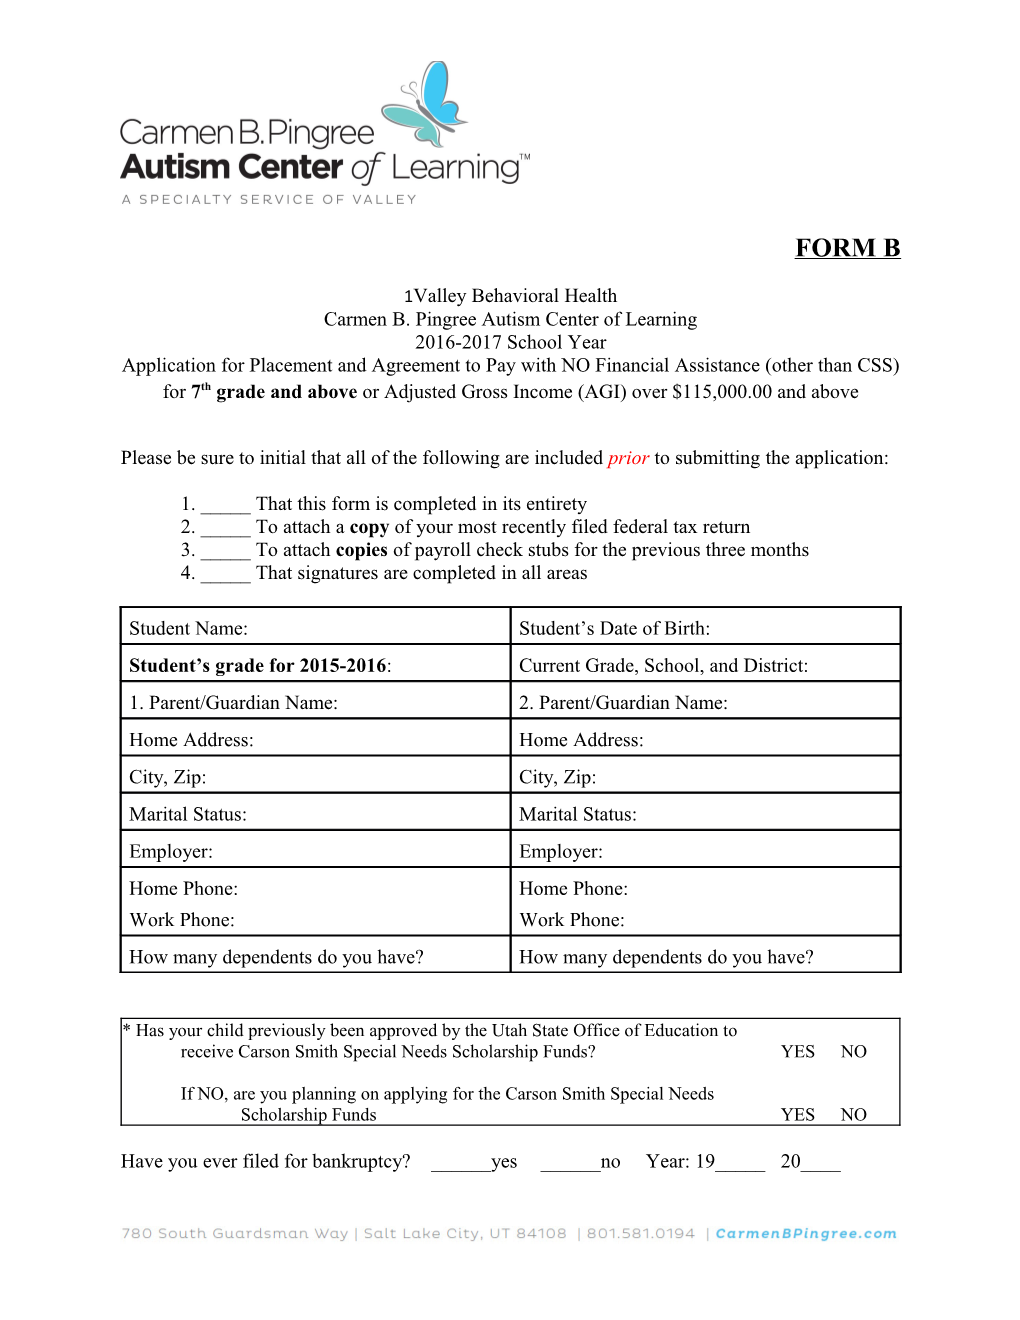 Carmen B. Pingree Autism Center of Learning